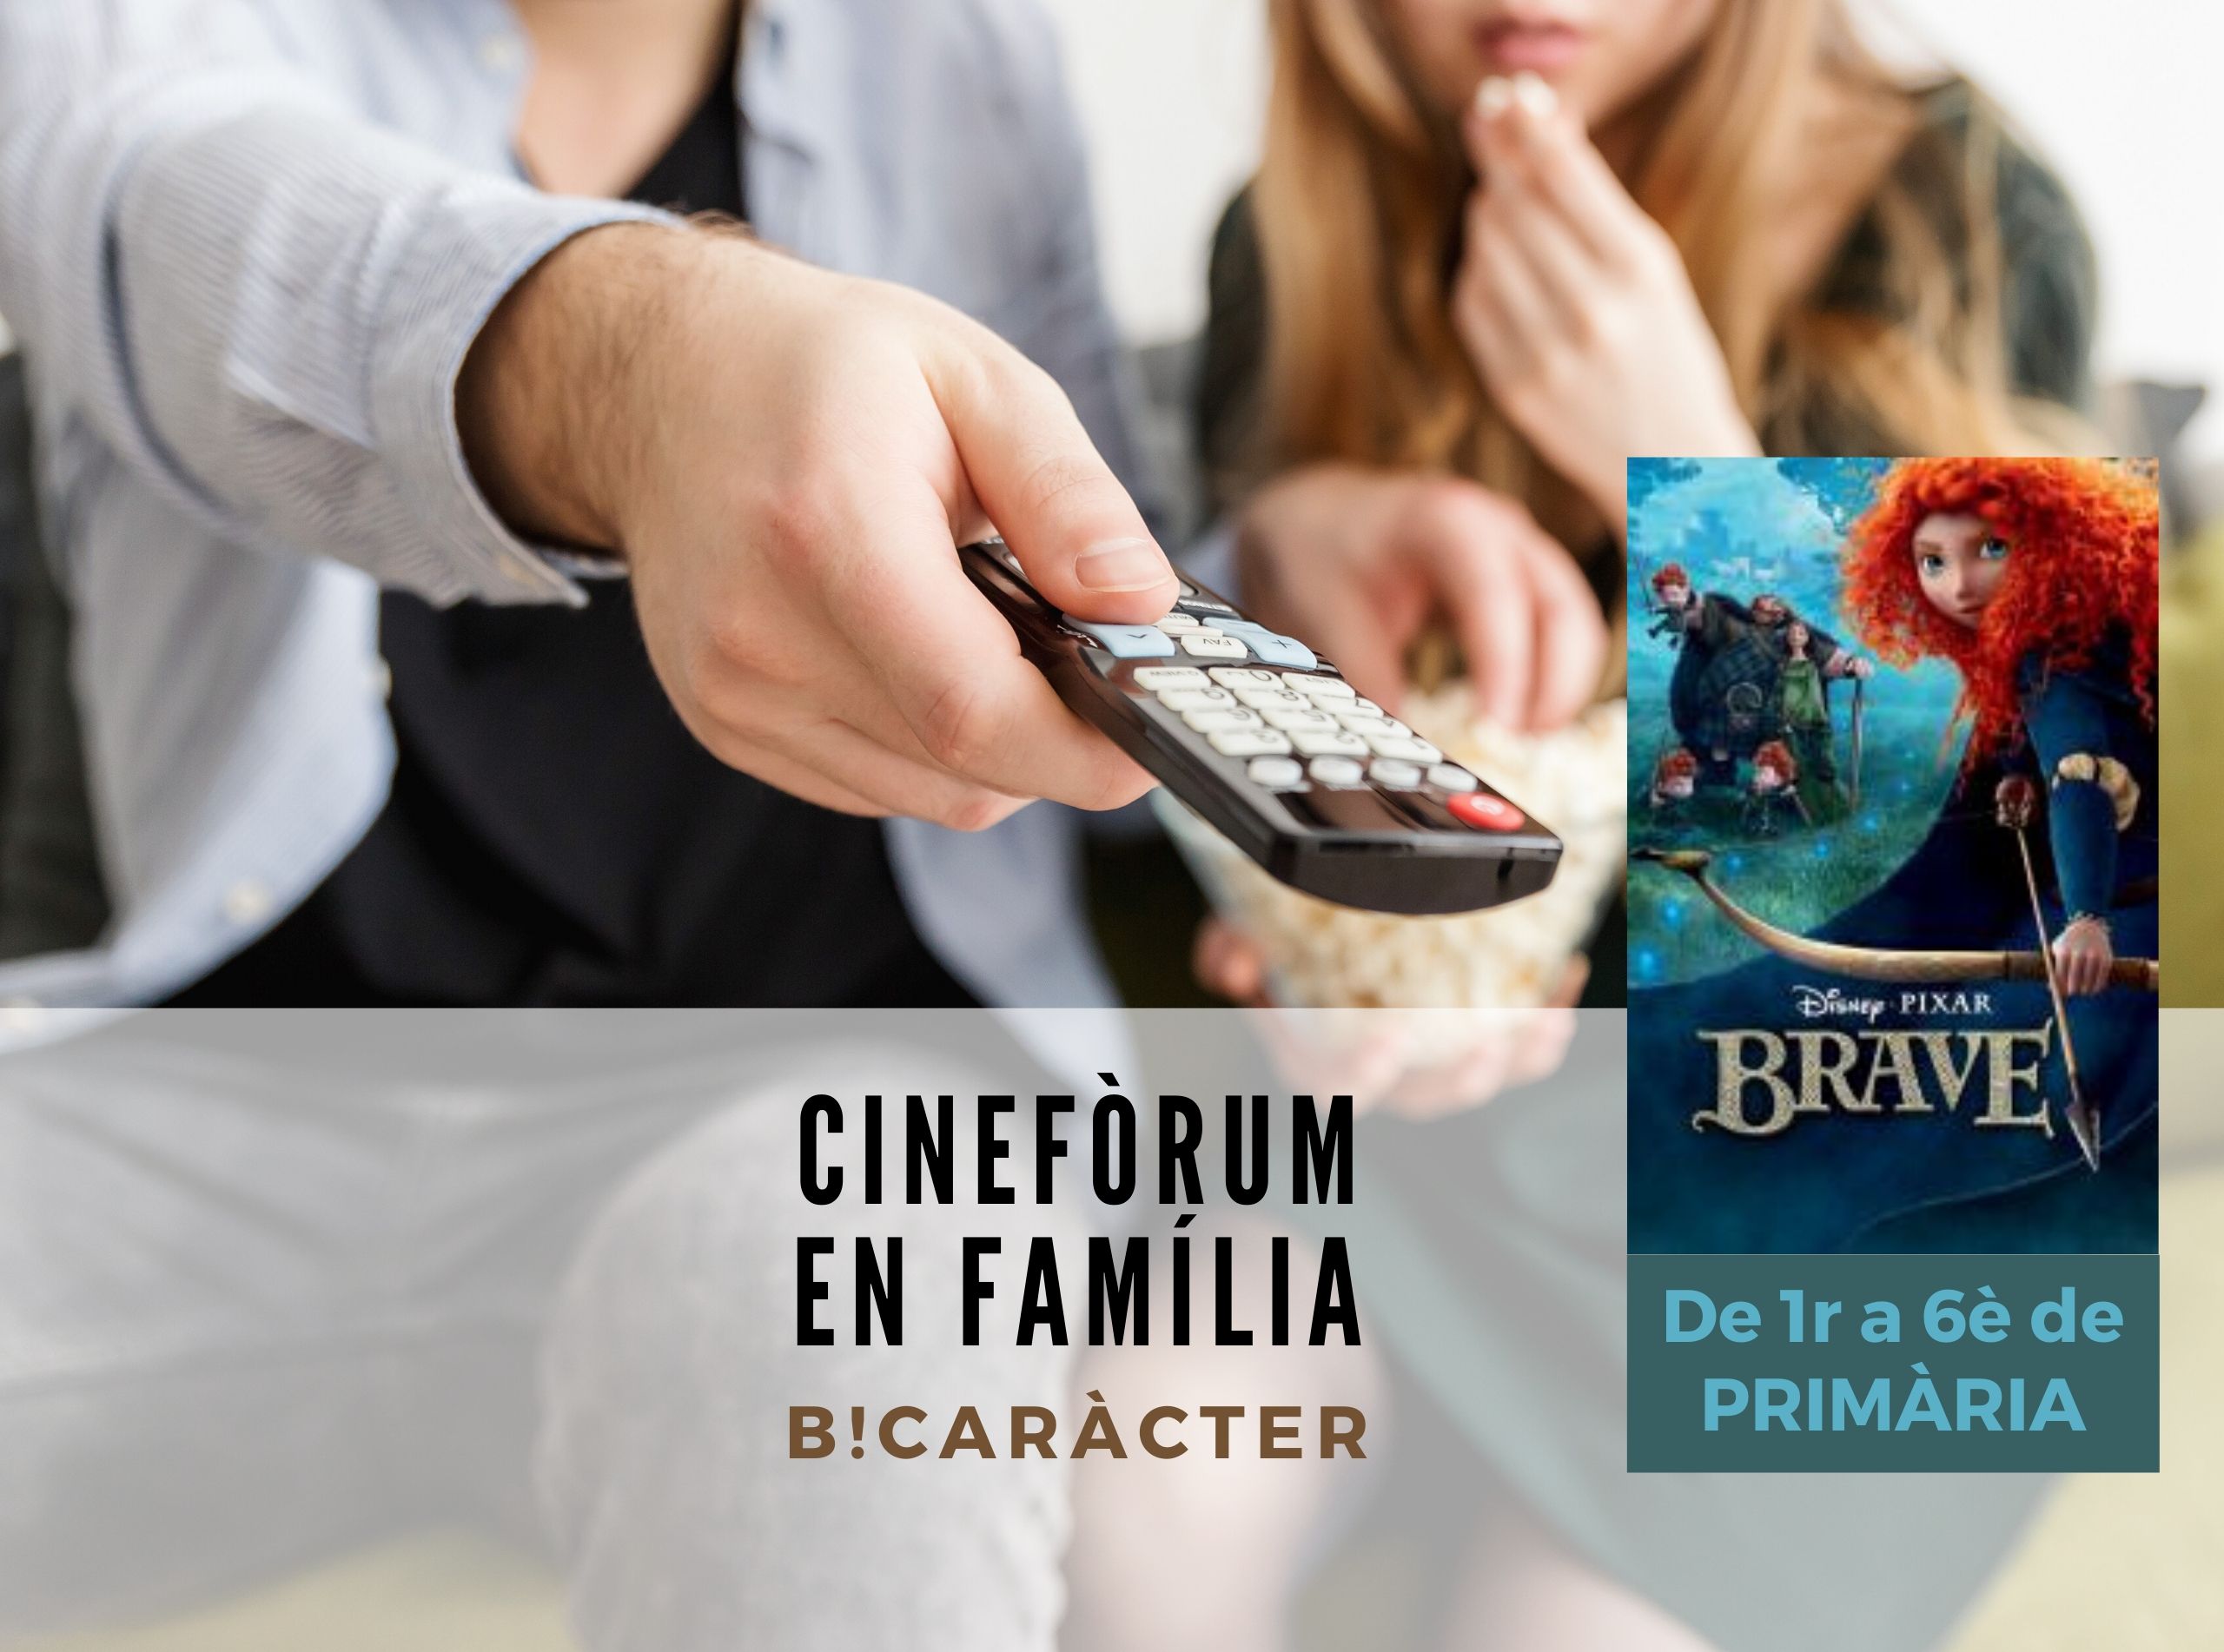 Cinefòrum en família per a Primària: Brave